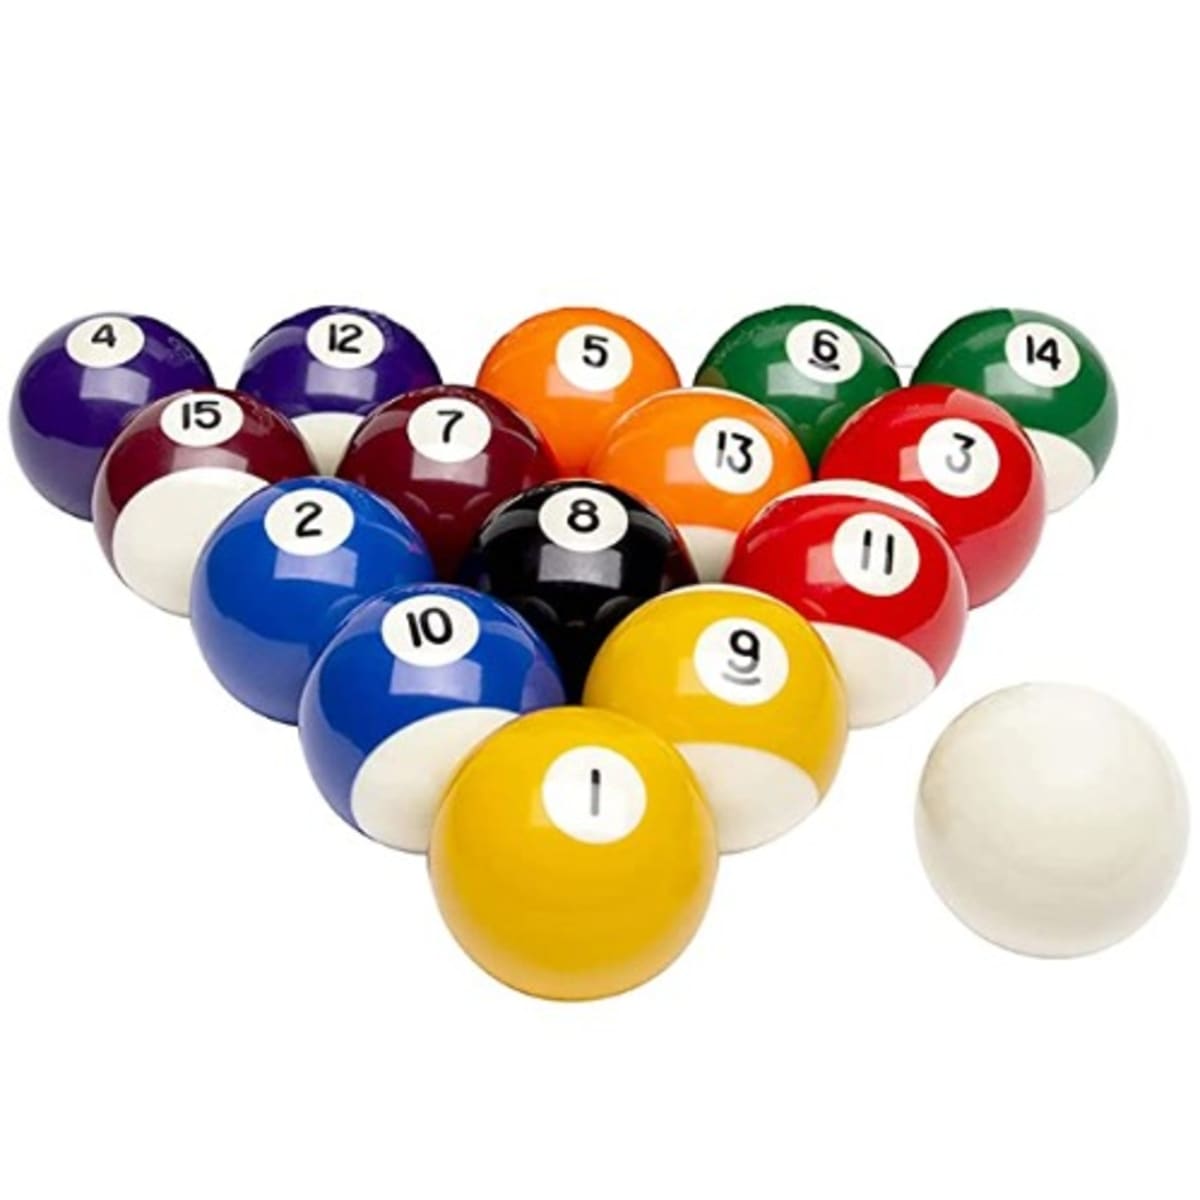 snooker balls online